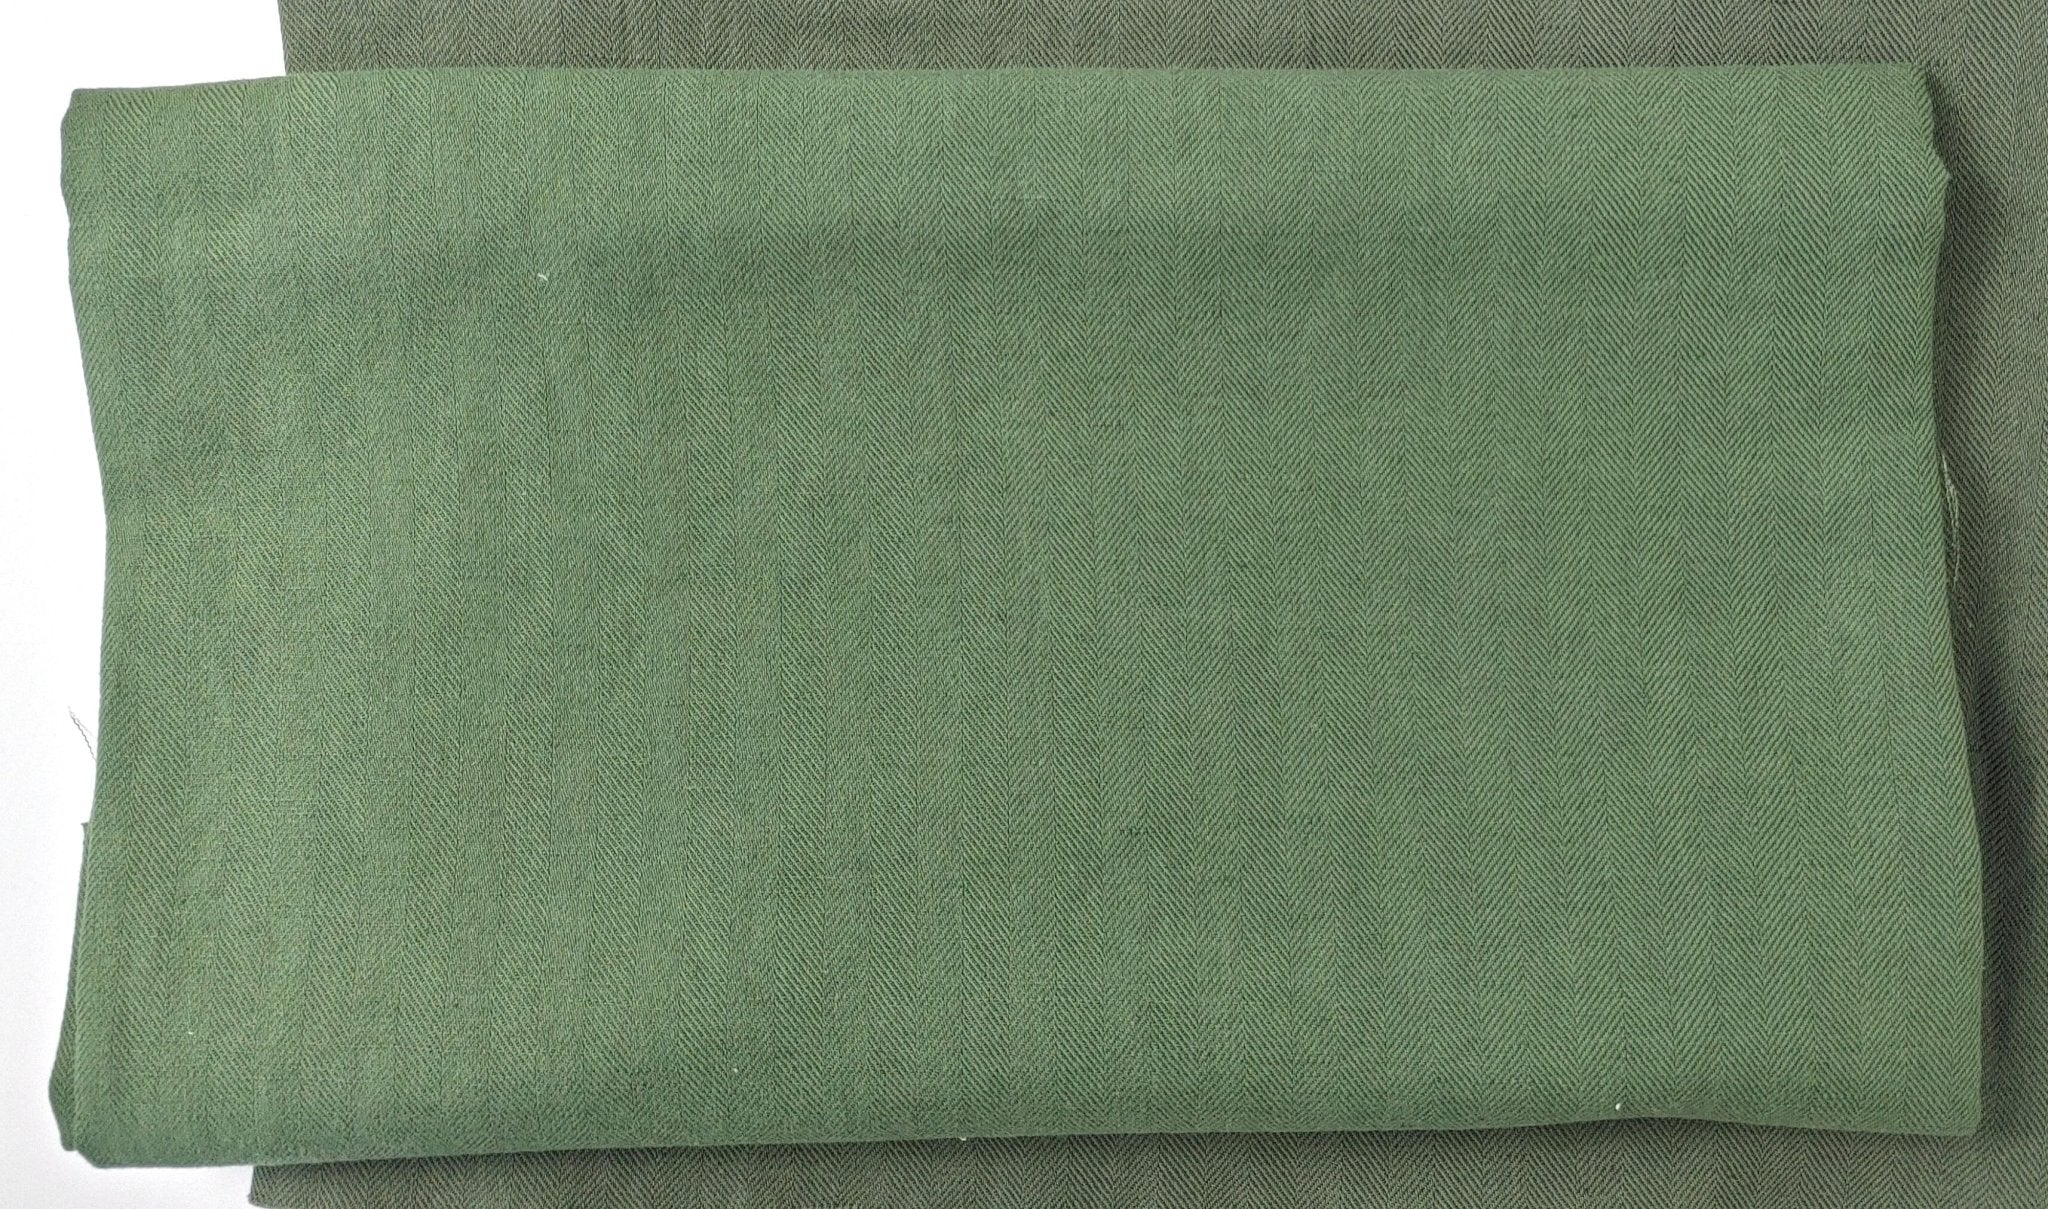 Linen Cotton HBT Herringbone Twill Solid Fabric Medium Weight 6678 6707 6820 7095 7659 7660 7661 - The Linen Lab - Green